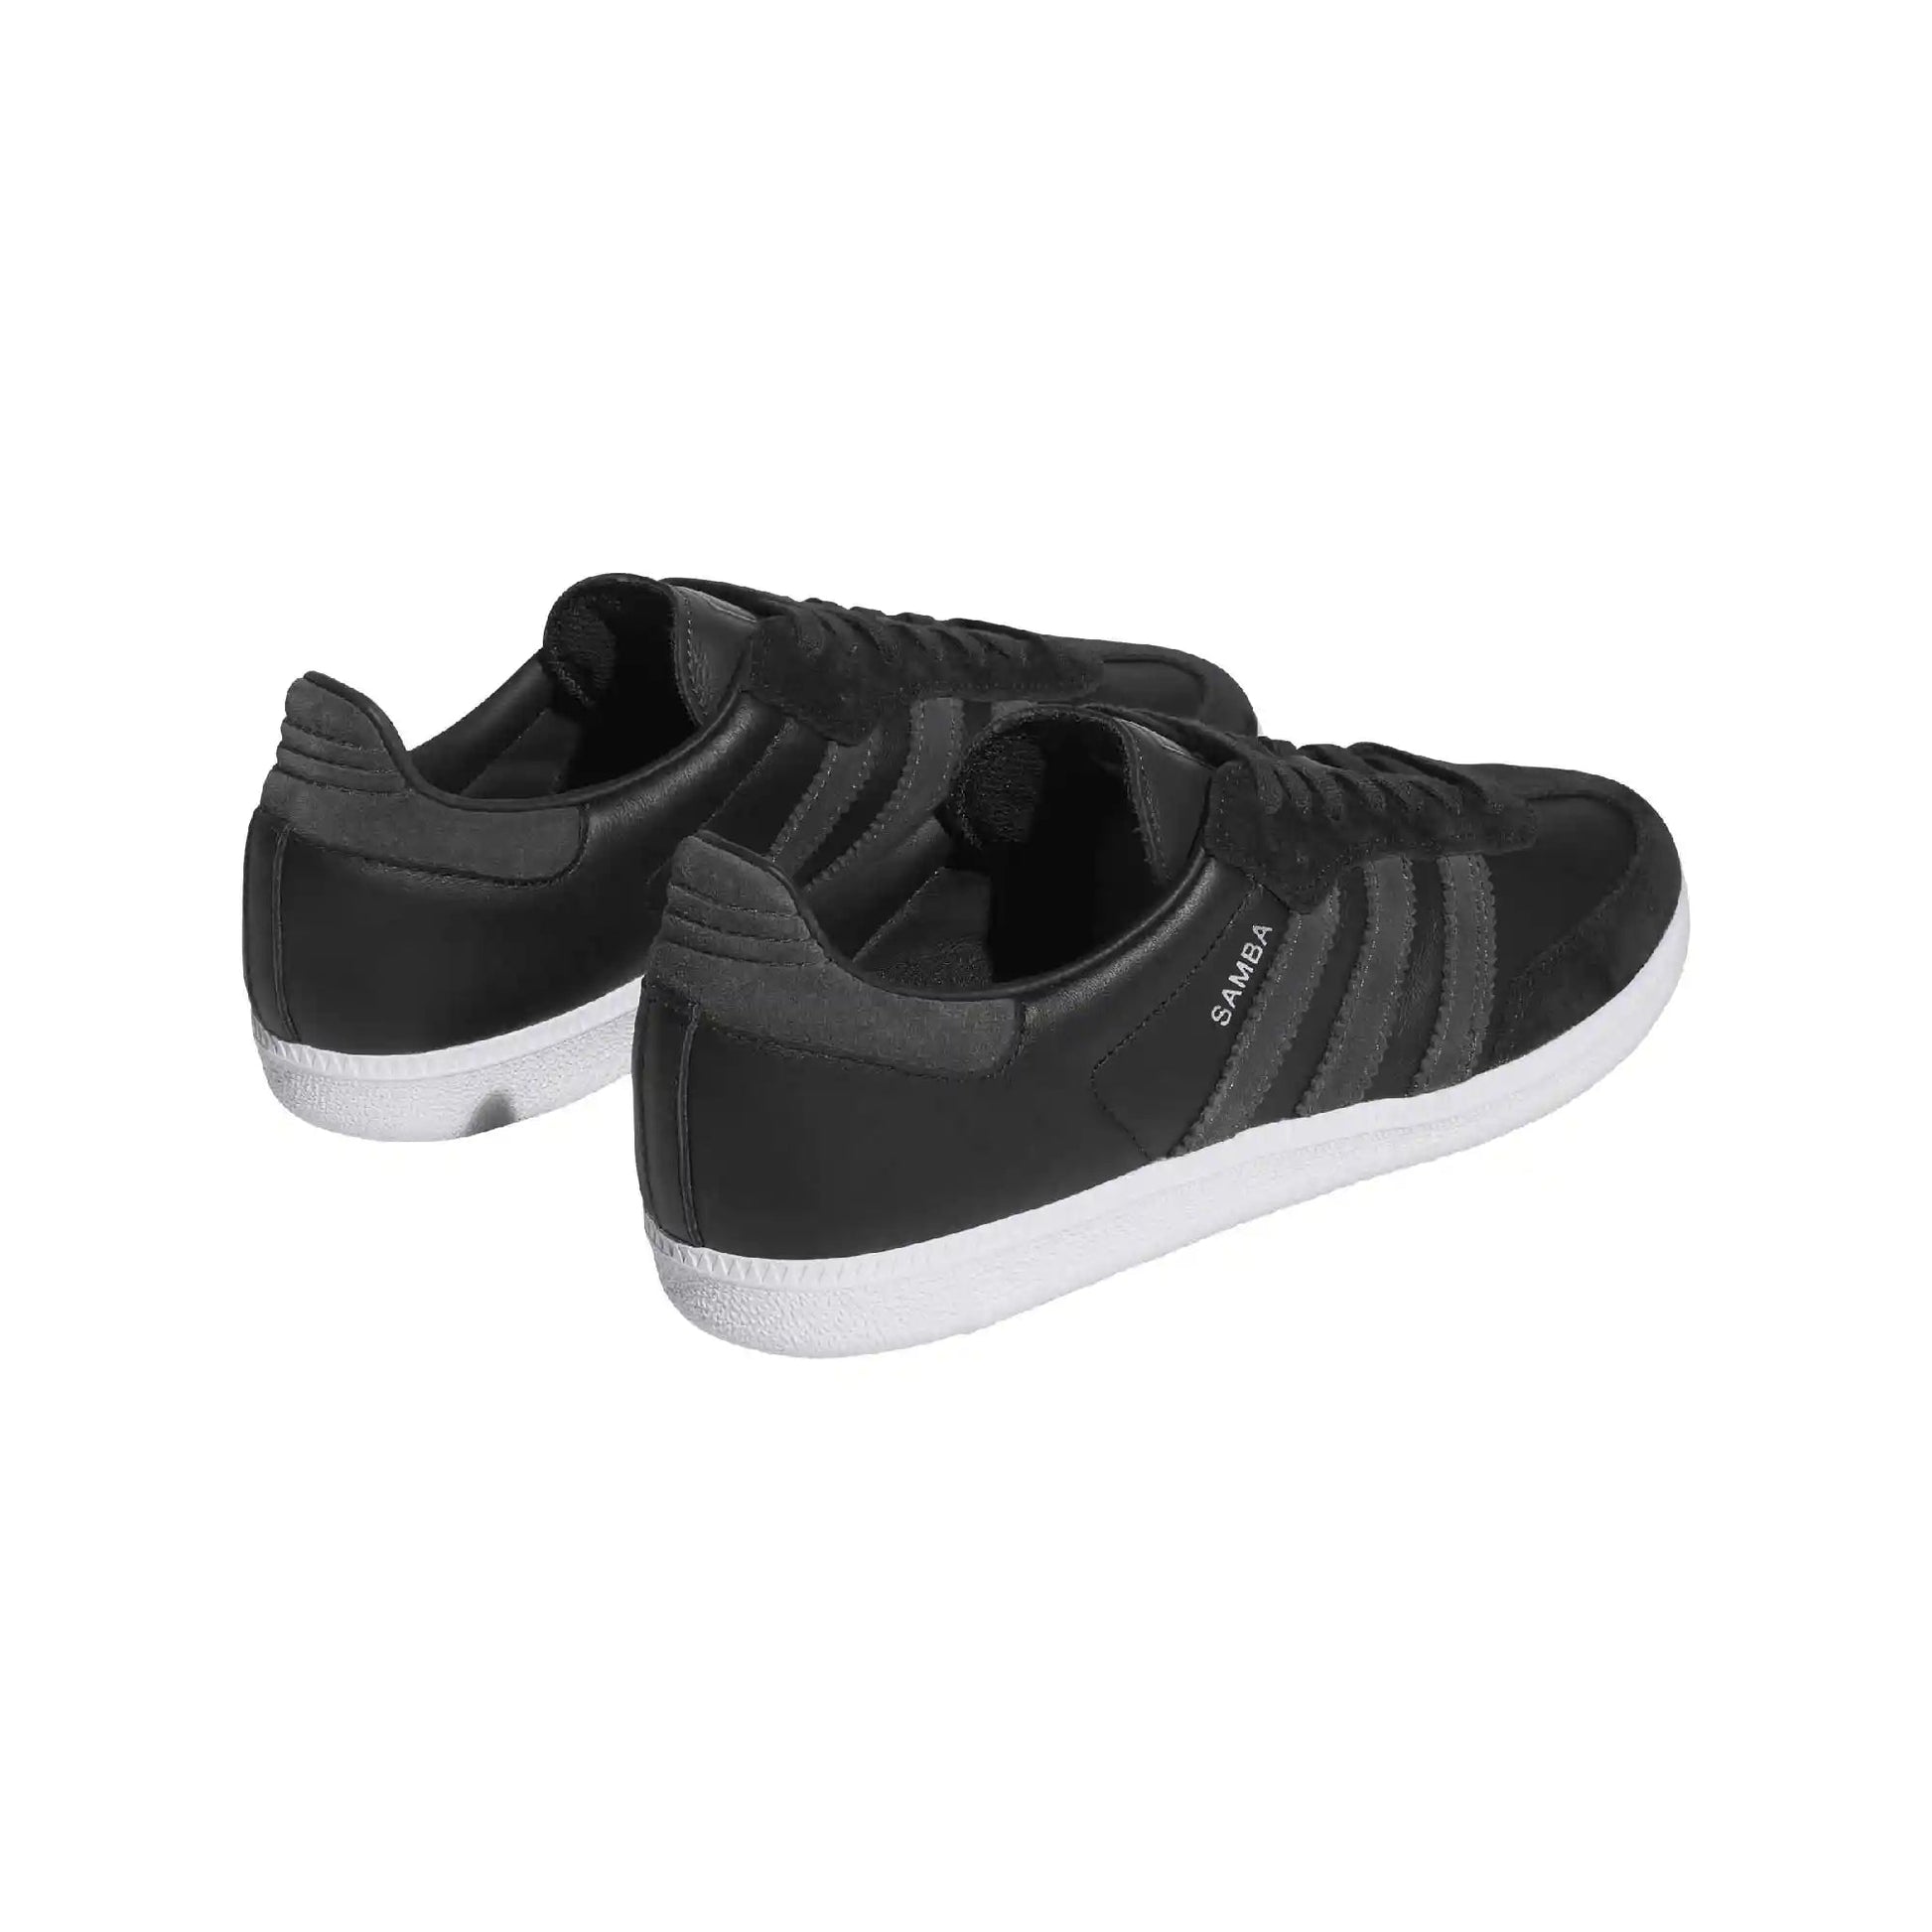 Adidas Samba Adv, core black/carbon/silver metallic - Tiki Room Skateboards - 6